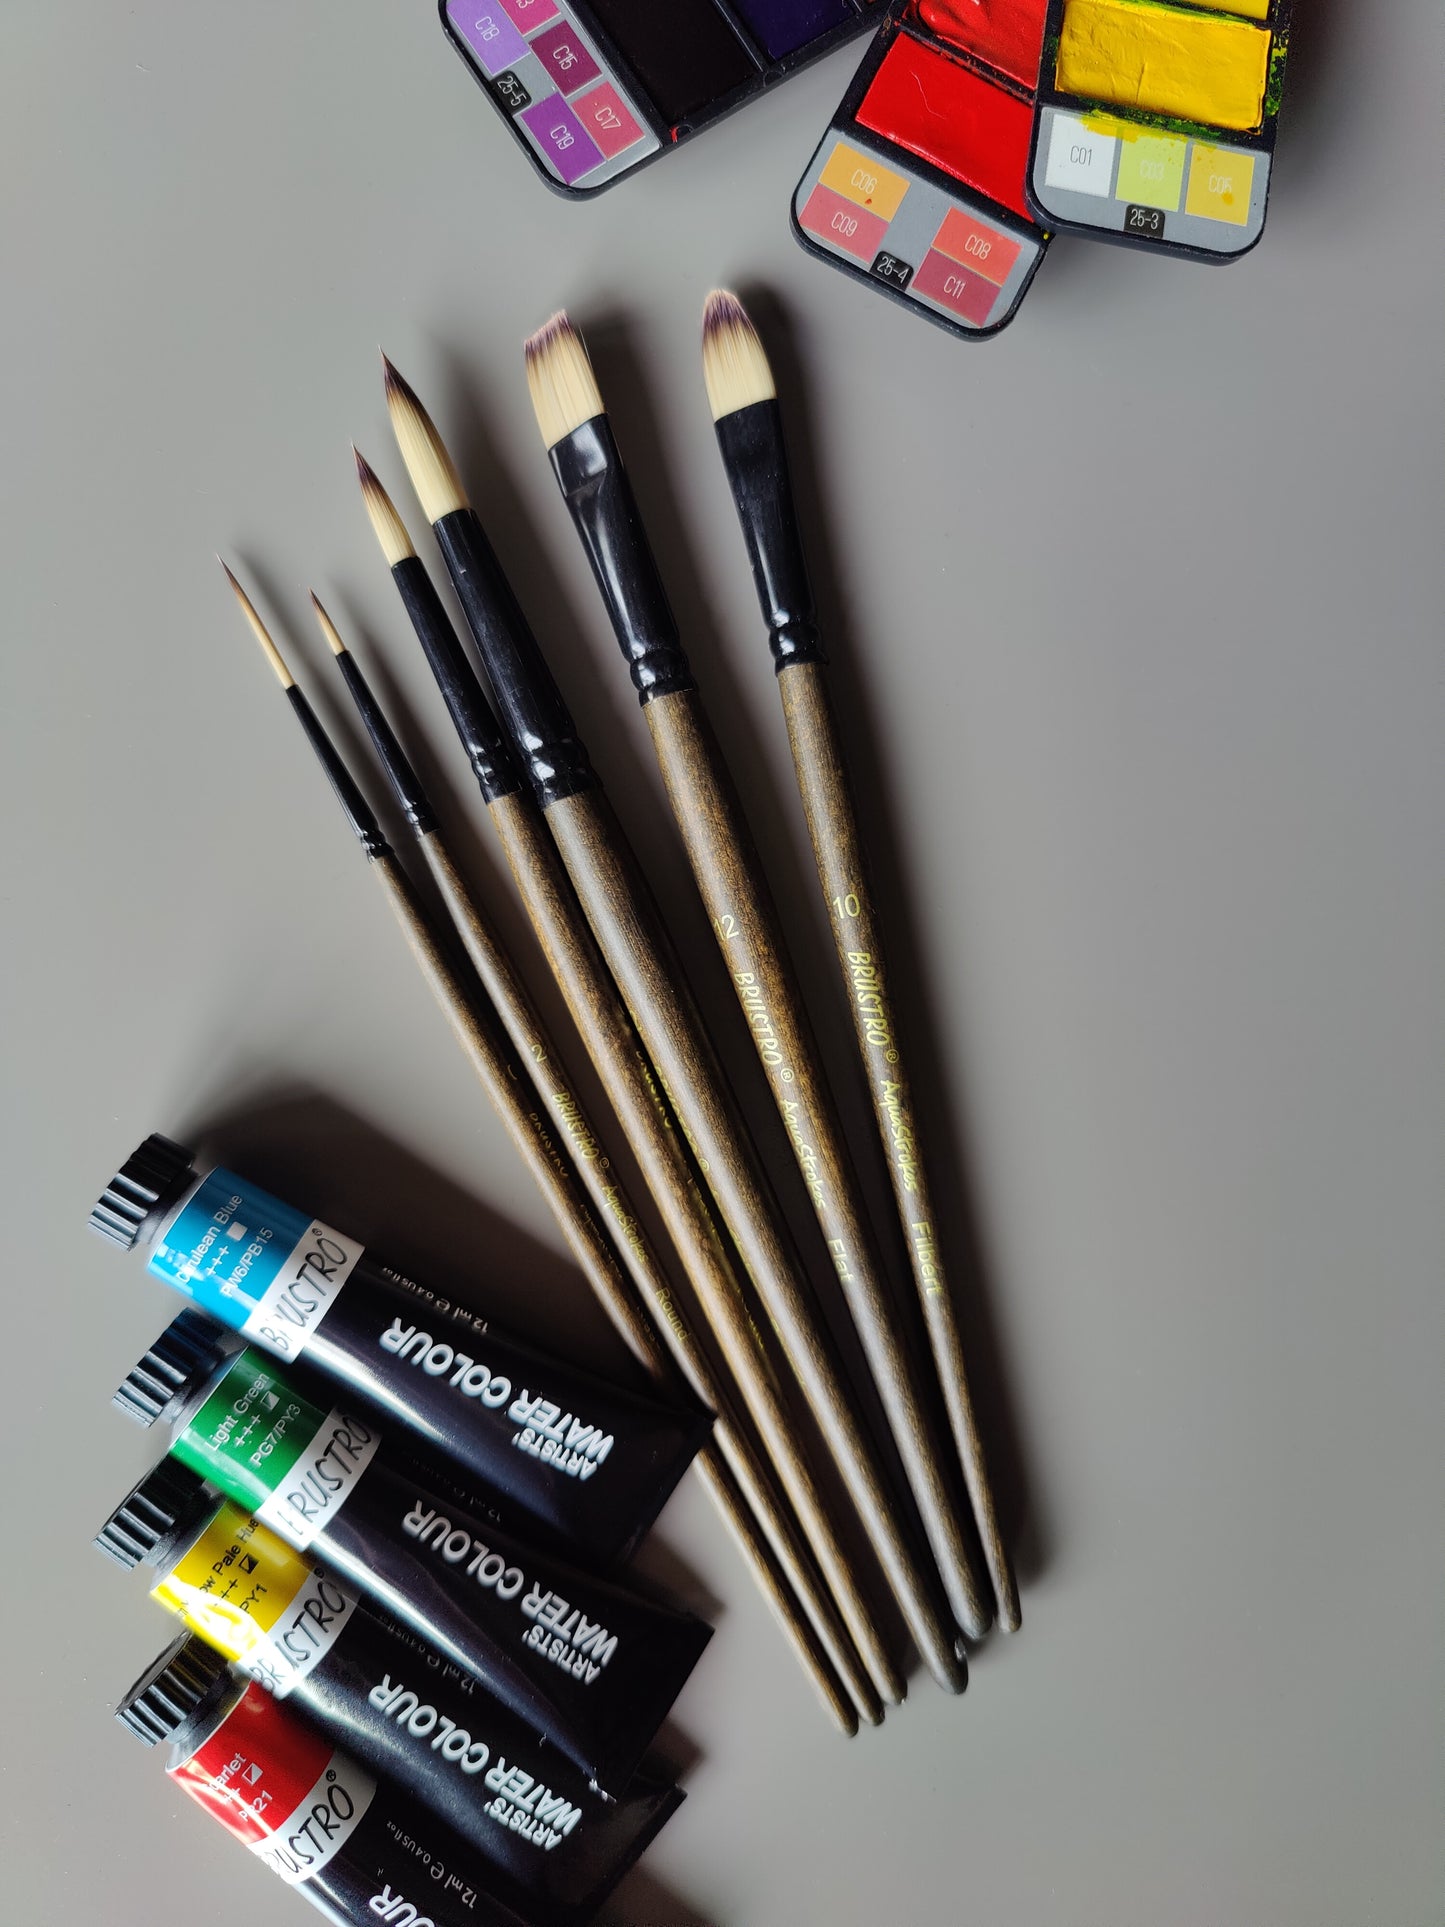 Brustro AquaStrokes Artist Brushes for Watercolour Gouache and Acrylics, Brush Set of 6